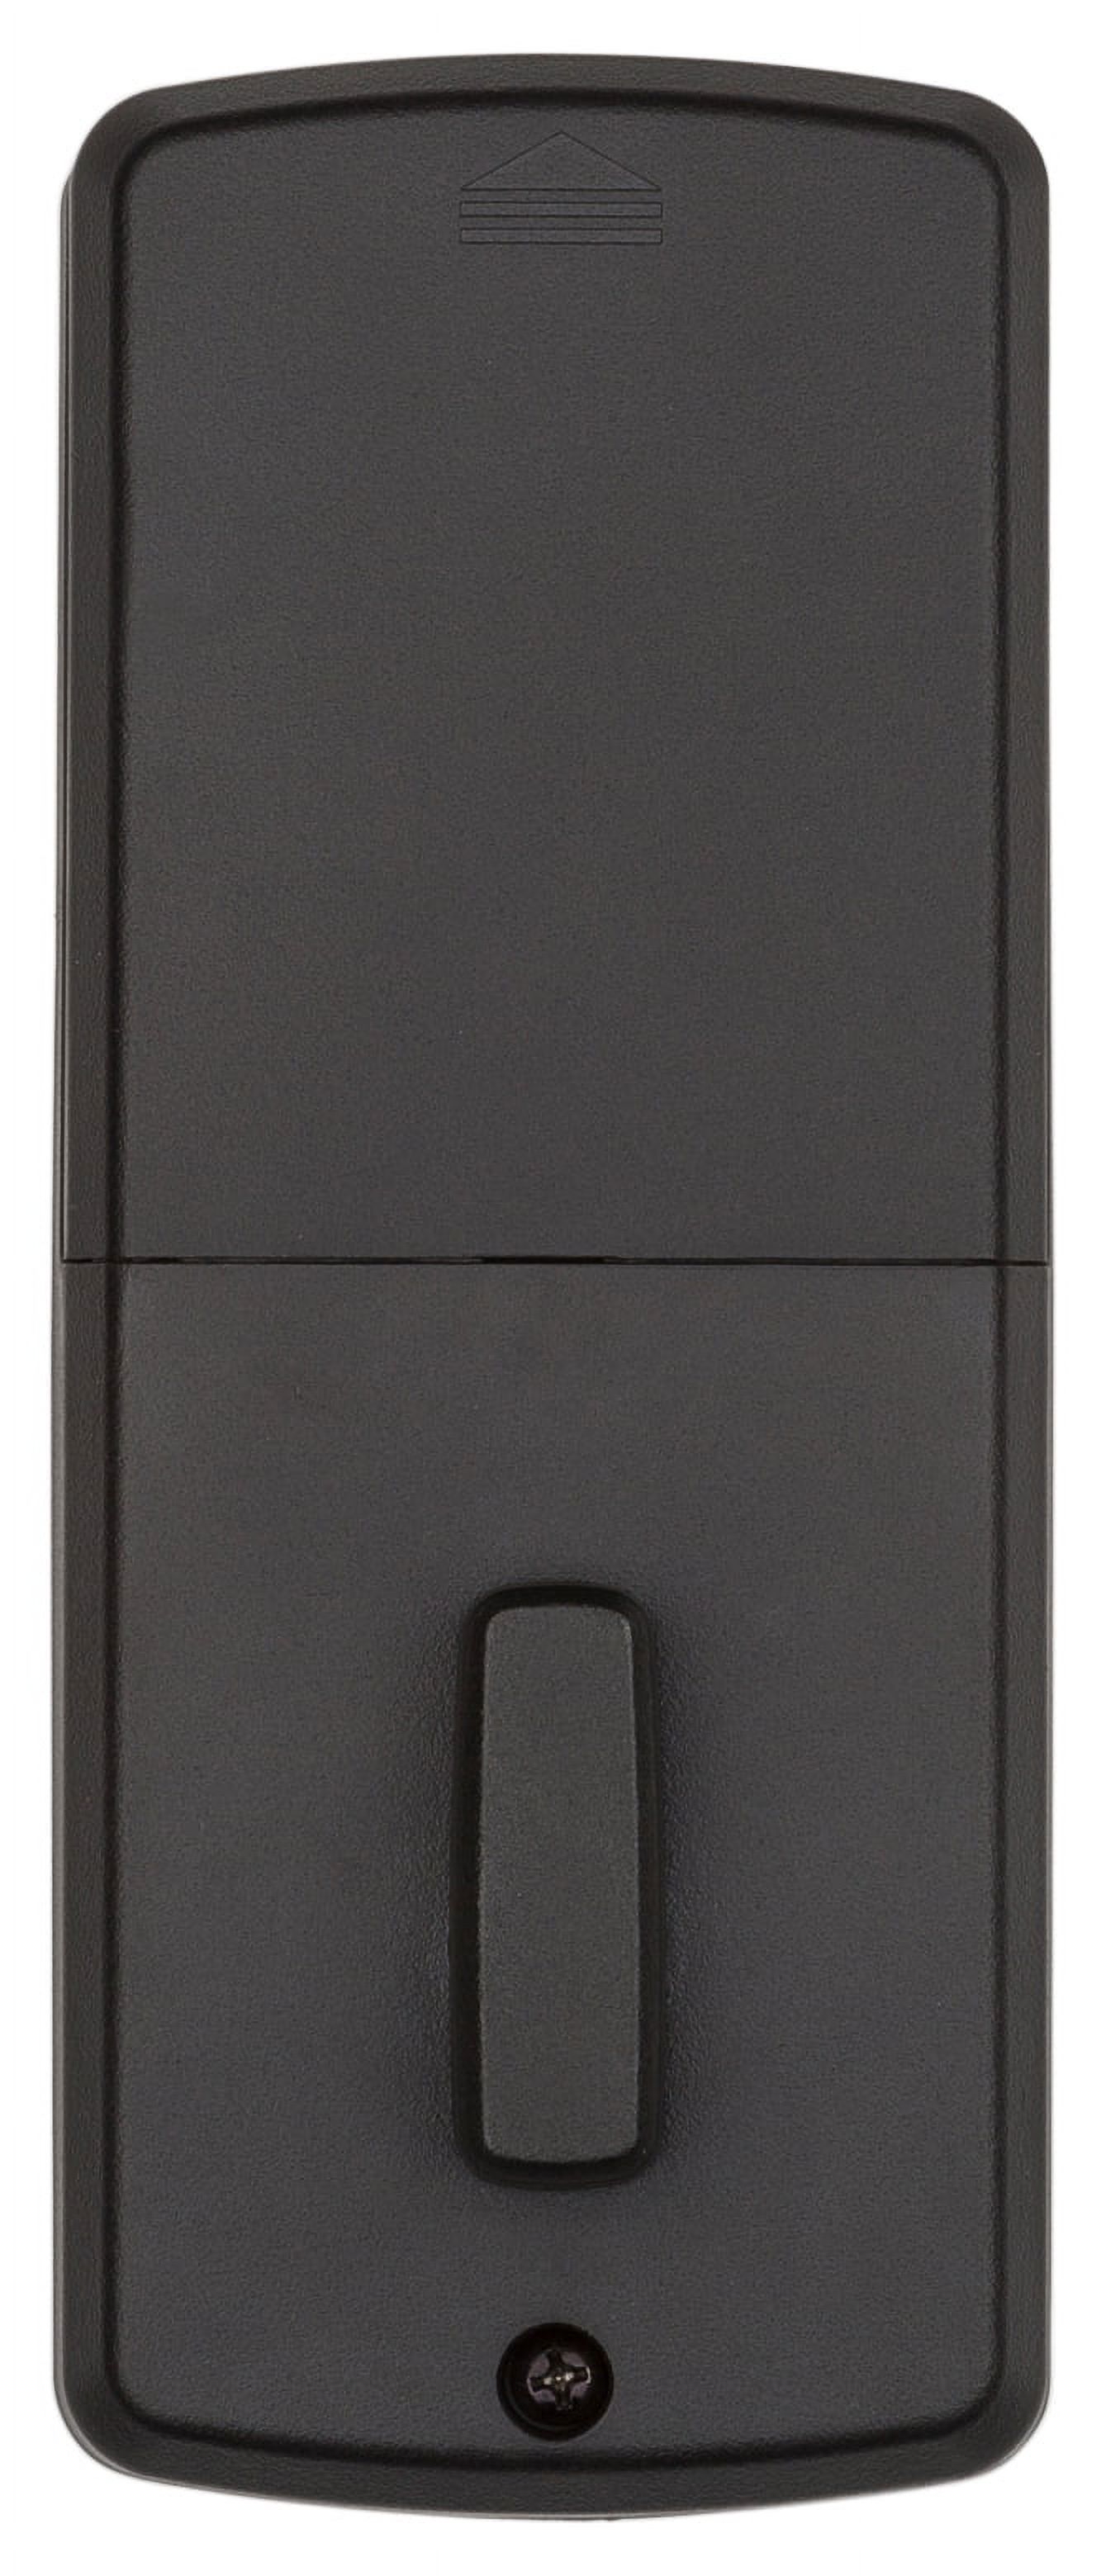 Kwikset 905 Keywayless Electronic Keypad Deadbolt for Garage or Side door in Satin Nickel - image 2 of 4